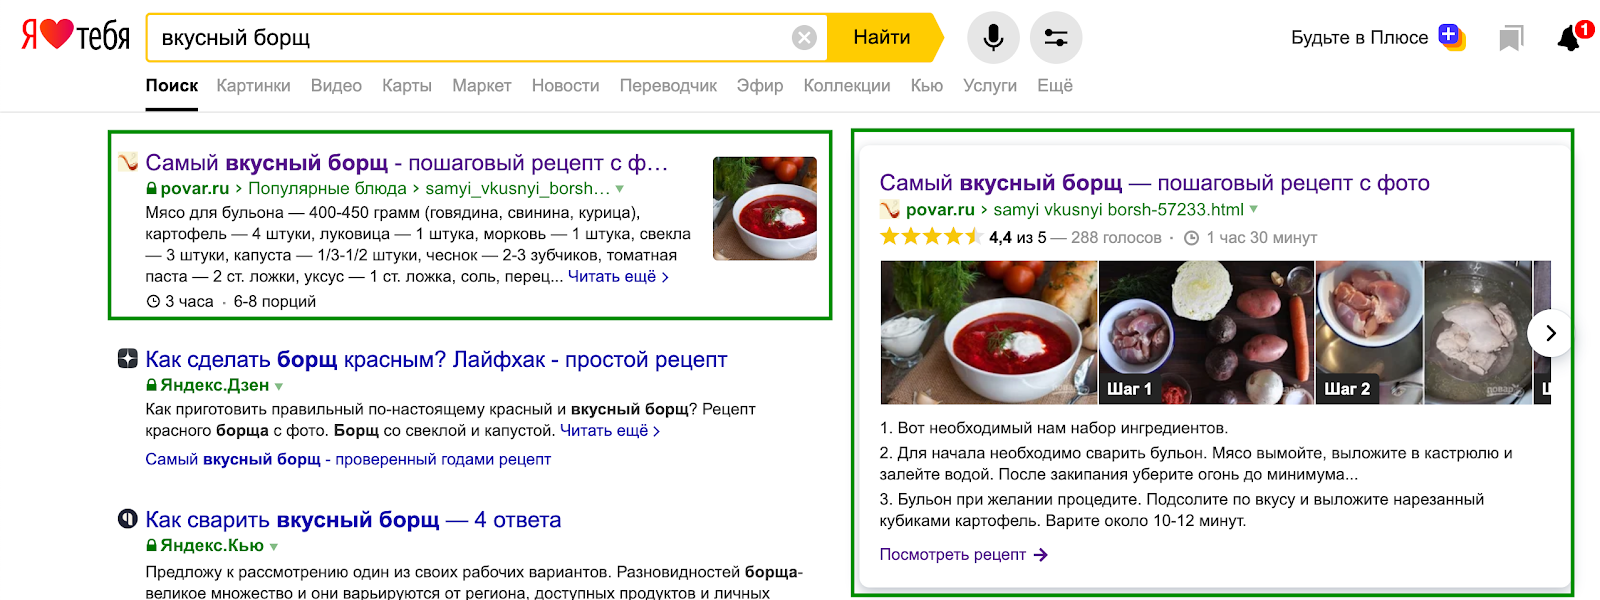 Пример расширенного сниппета в Яндексе